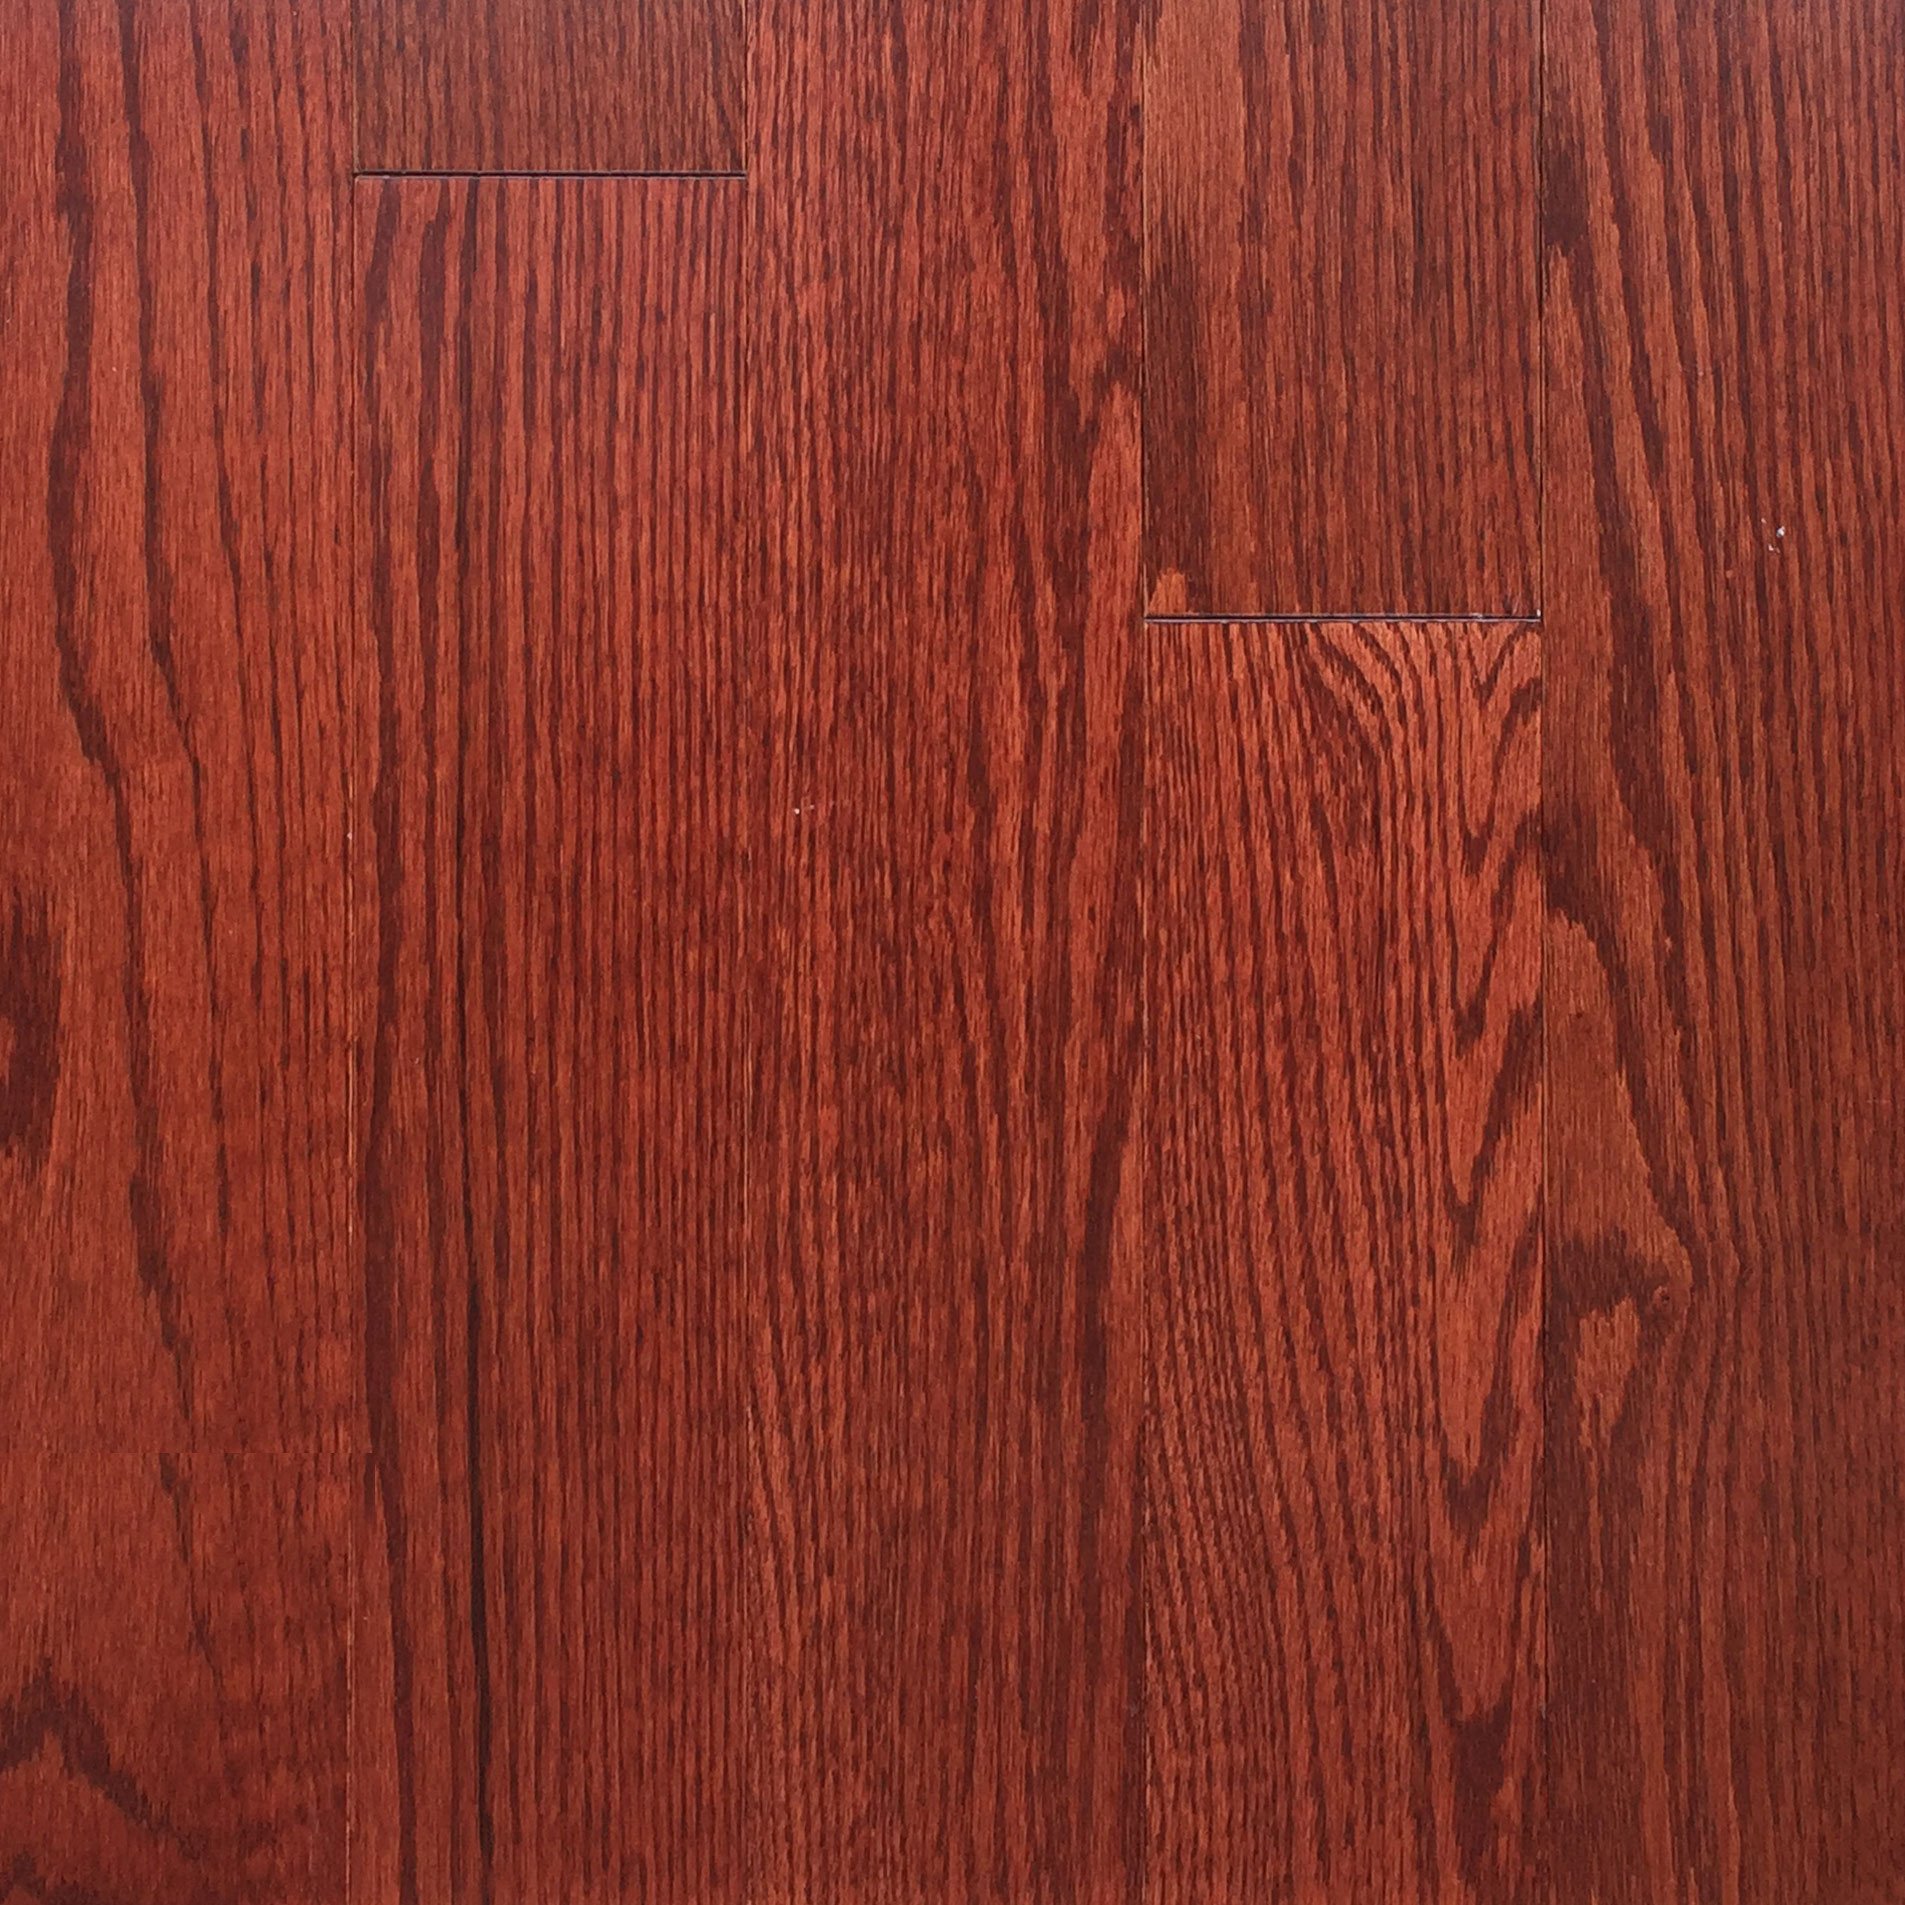 Red Oak Select Better Uphill Cherry, Select Hardwood Flooring